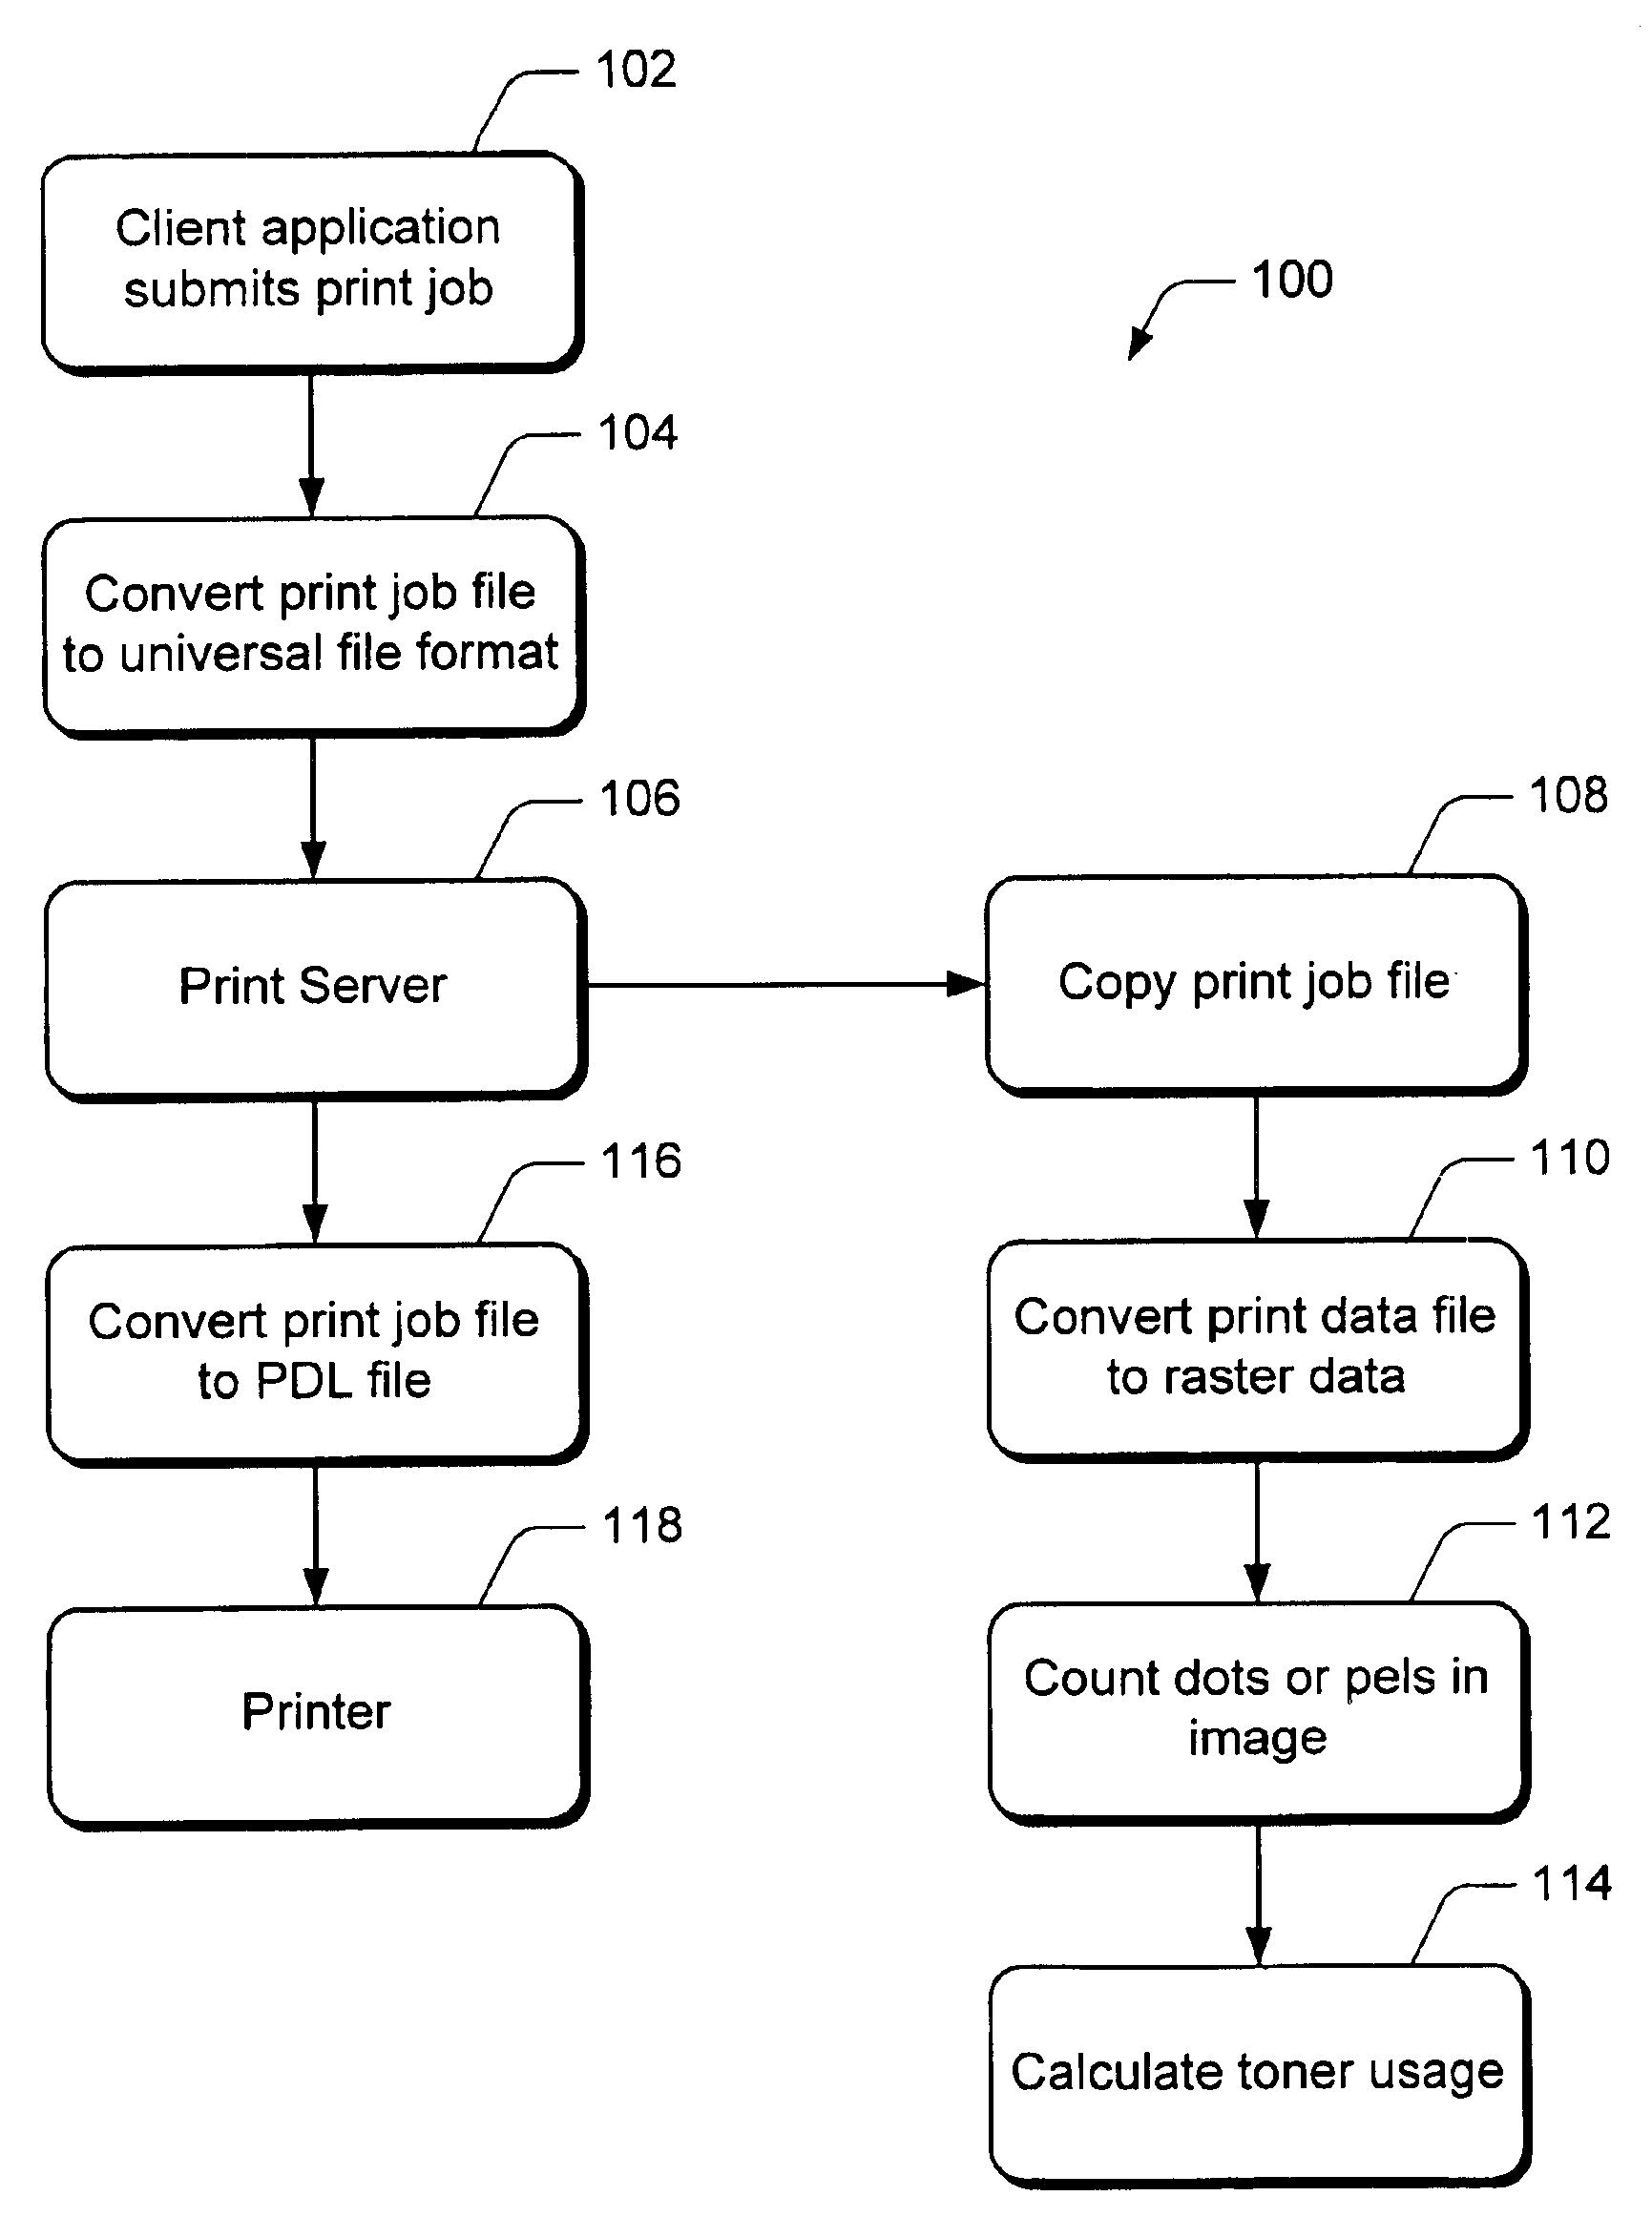 Calculation of toner usage